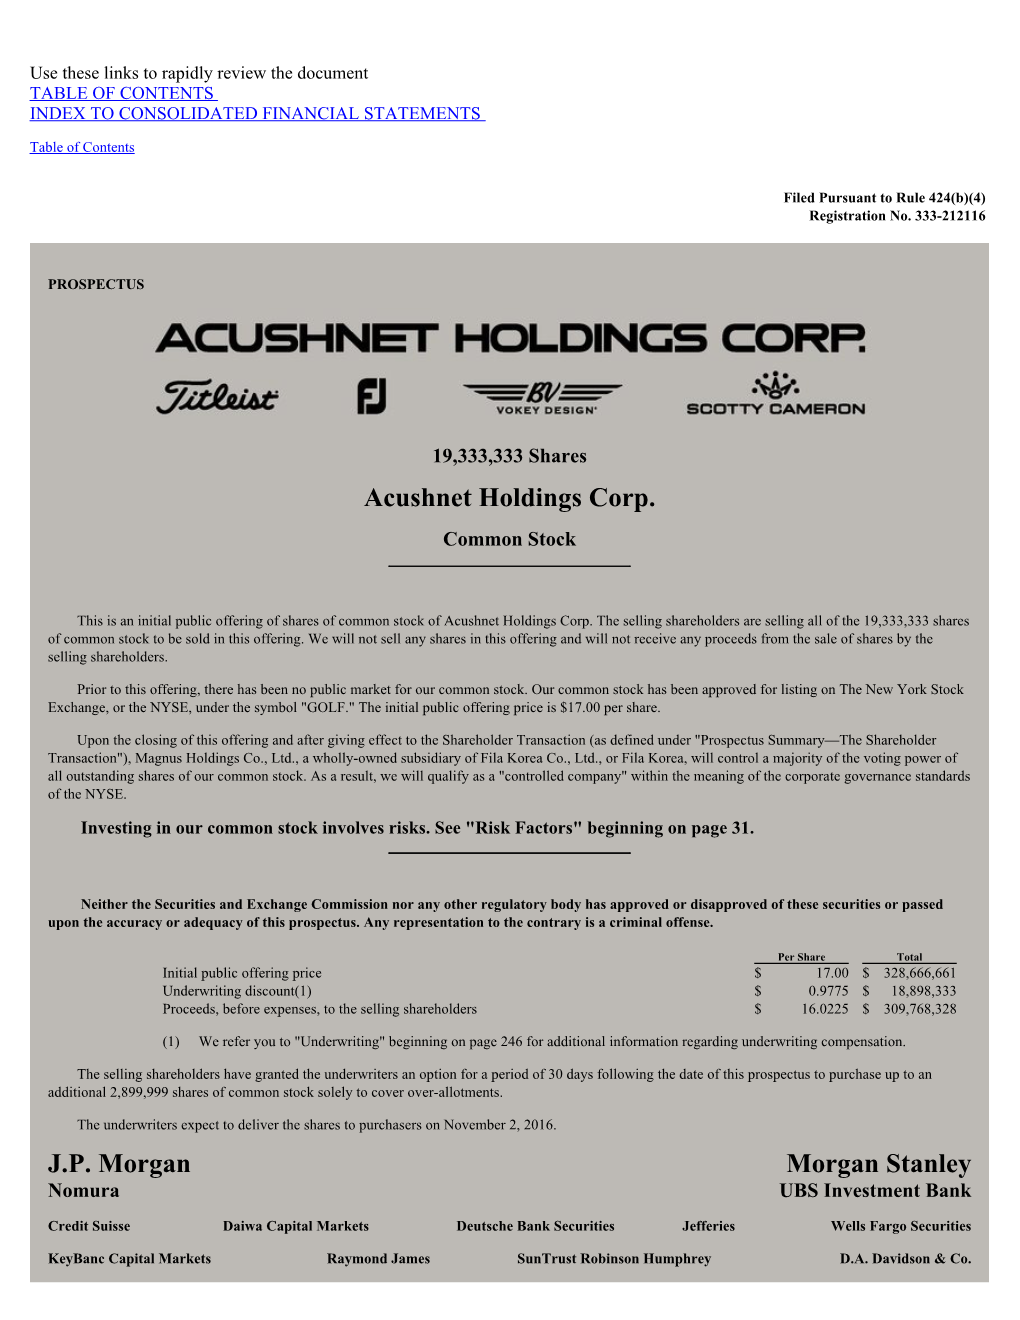 Acushnet Holdings Corp. Common Stock